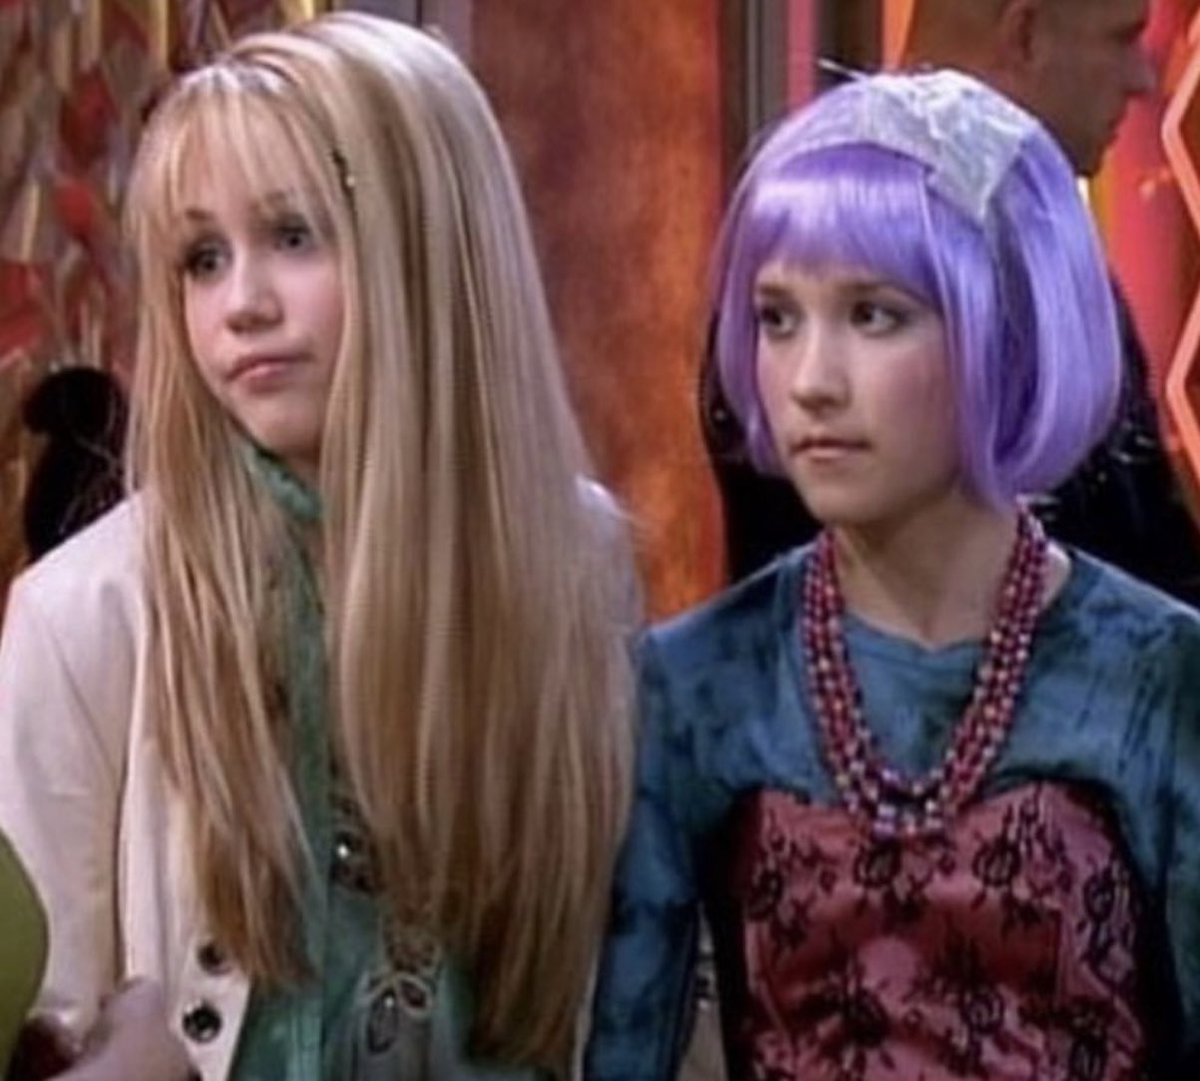 That time Hannah Montana and Ashley O went clubbing @netflix #blackmirror https://t.co/Q2baV6r8vk